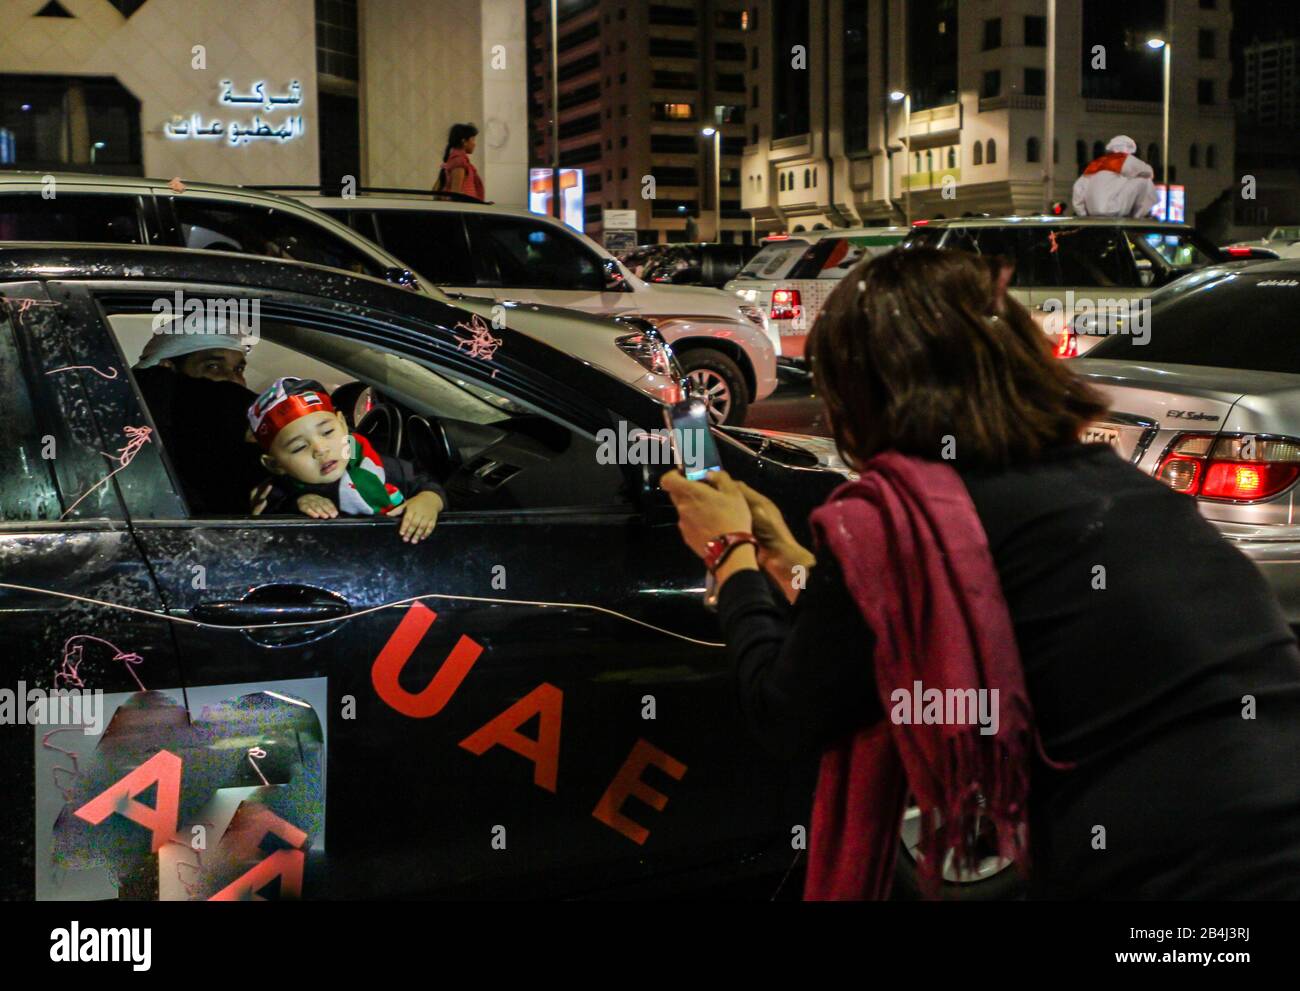 UAE national Day people celebrating in Abu Dhabi Streets in December 2, 2011 in UAE, Abu Dhabi Stock Photo